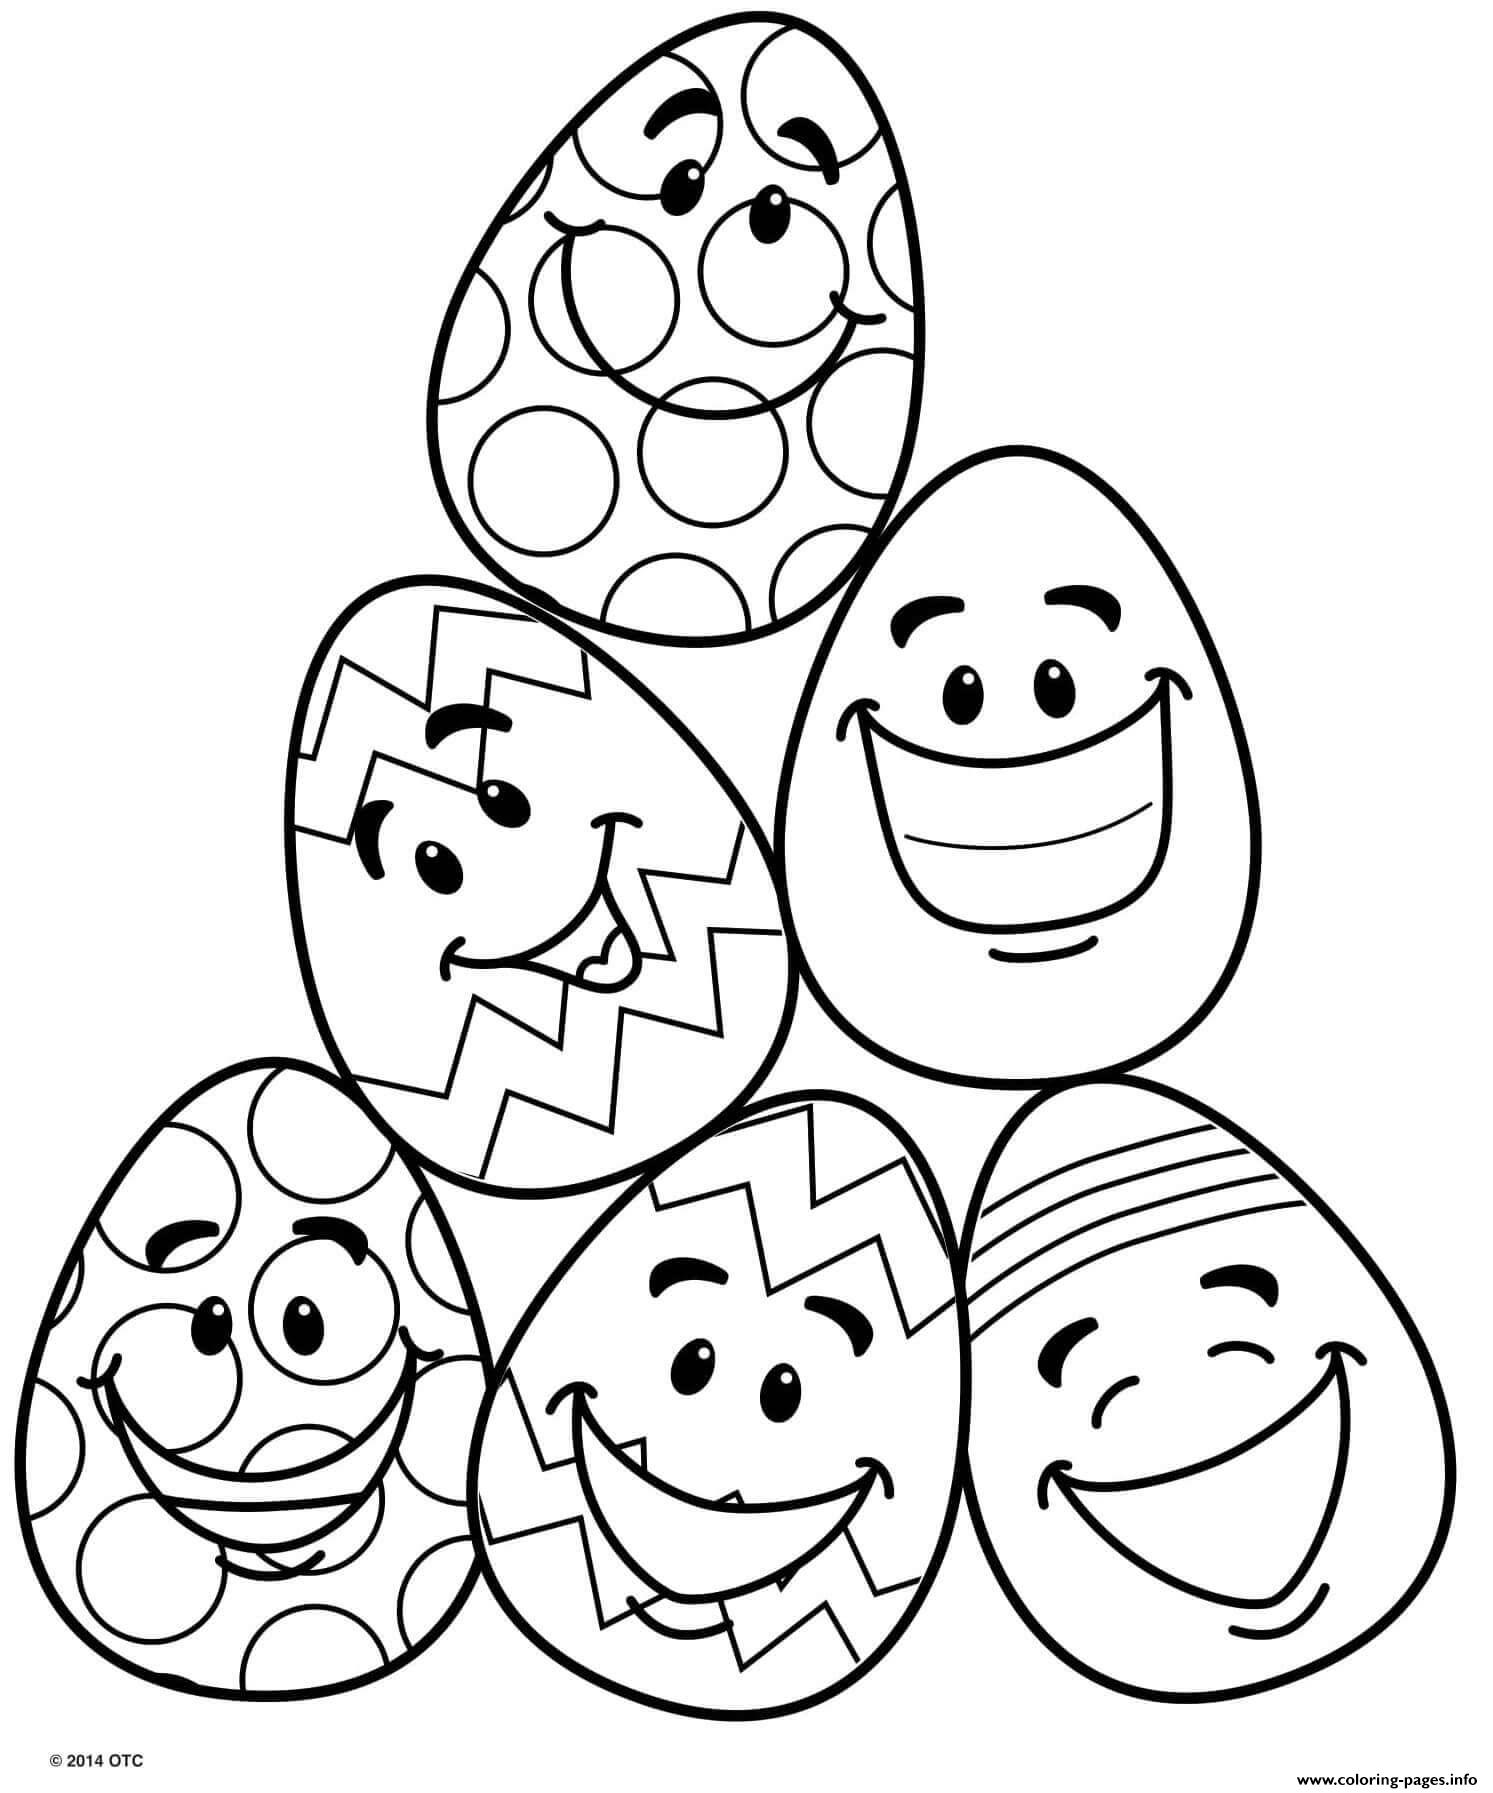 Funny Emoji Eggs Faces coloring